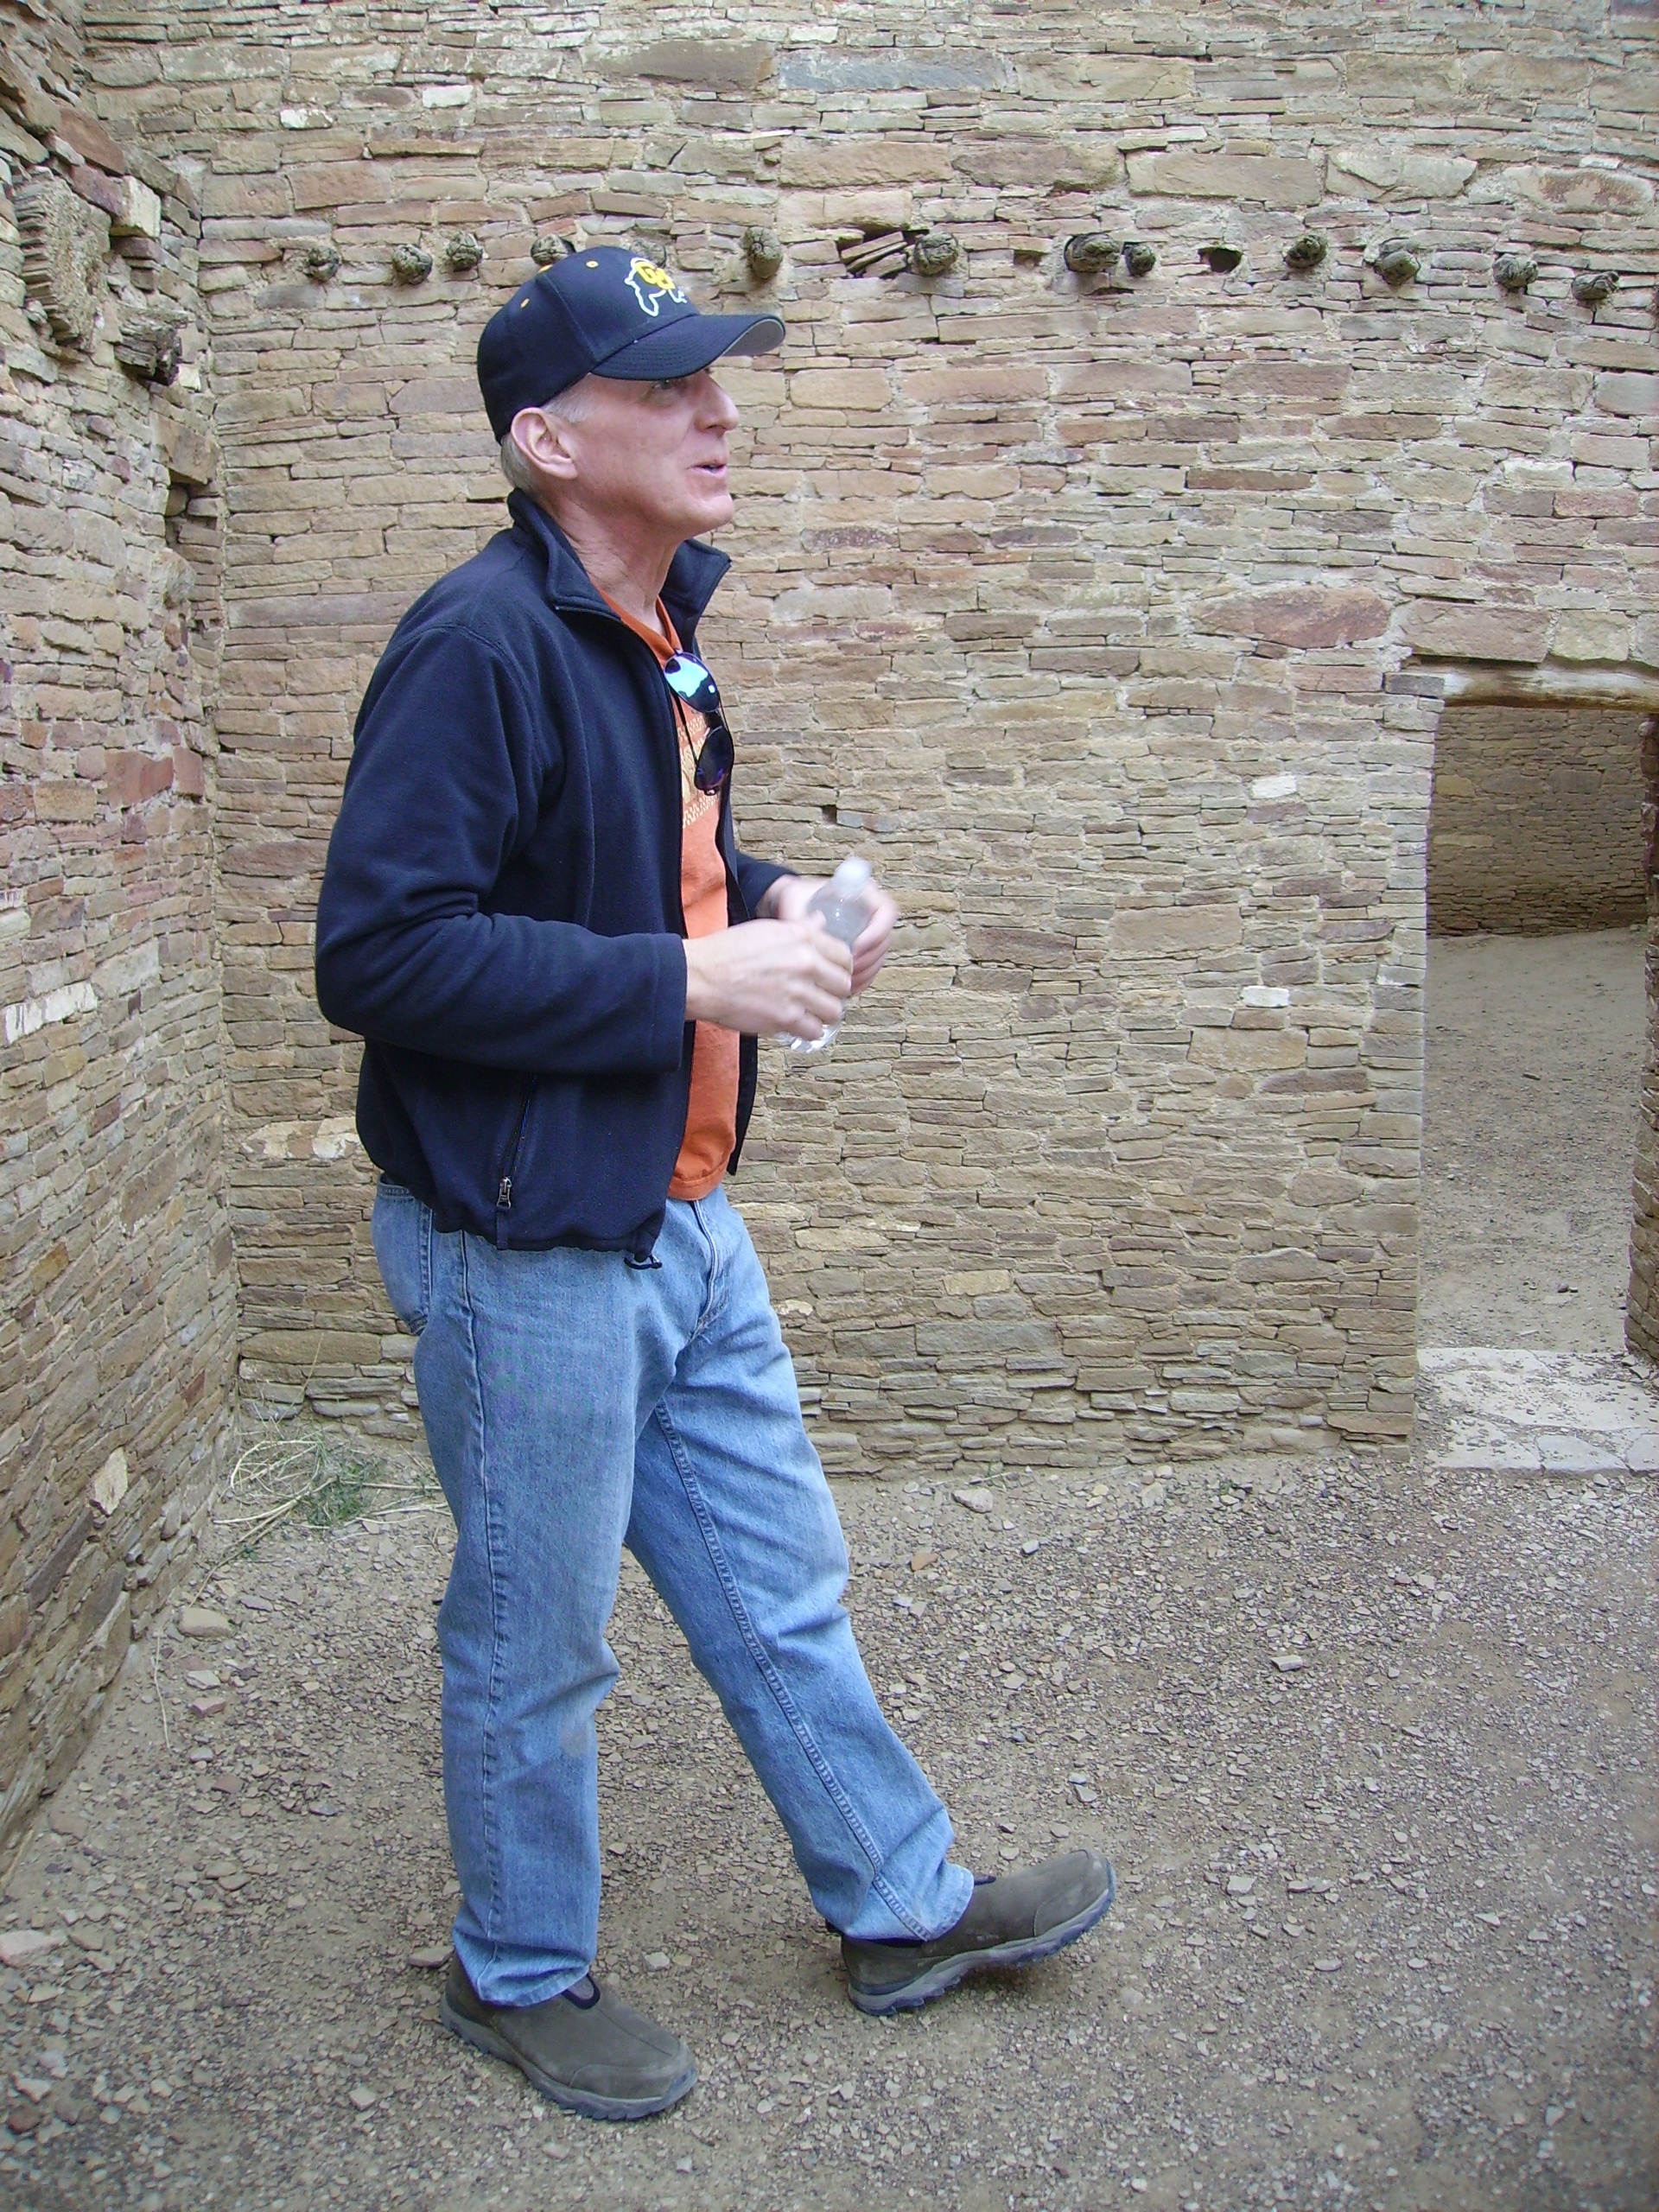 Steve Lekson at Pueblo Bonito